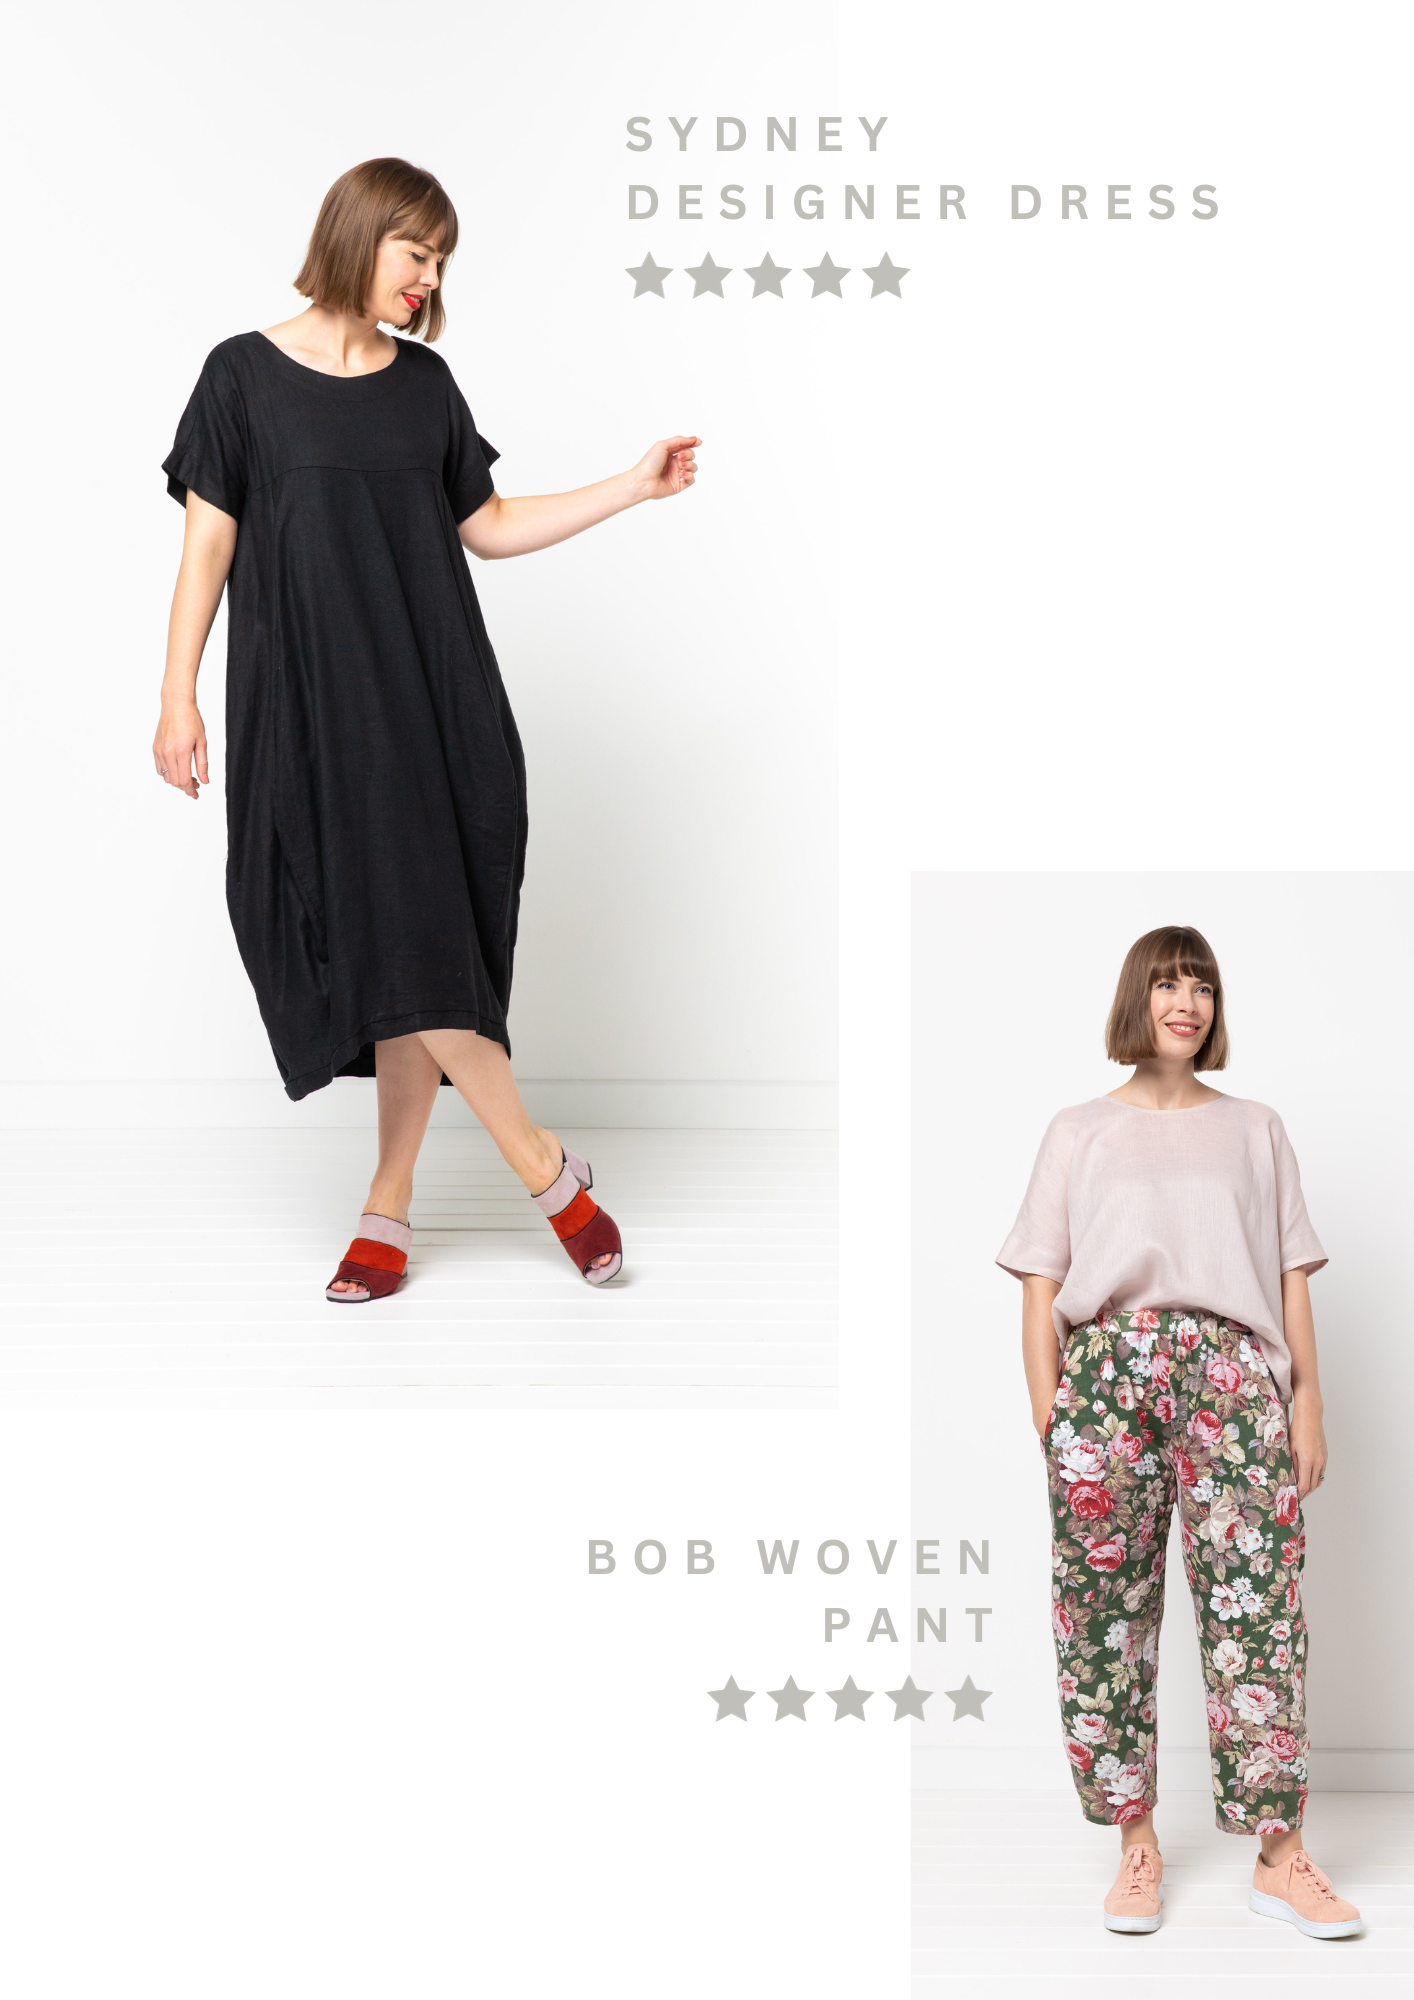 Sydney Designer Dress & Bob Woven Pant